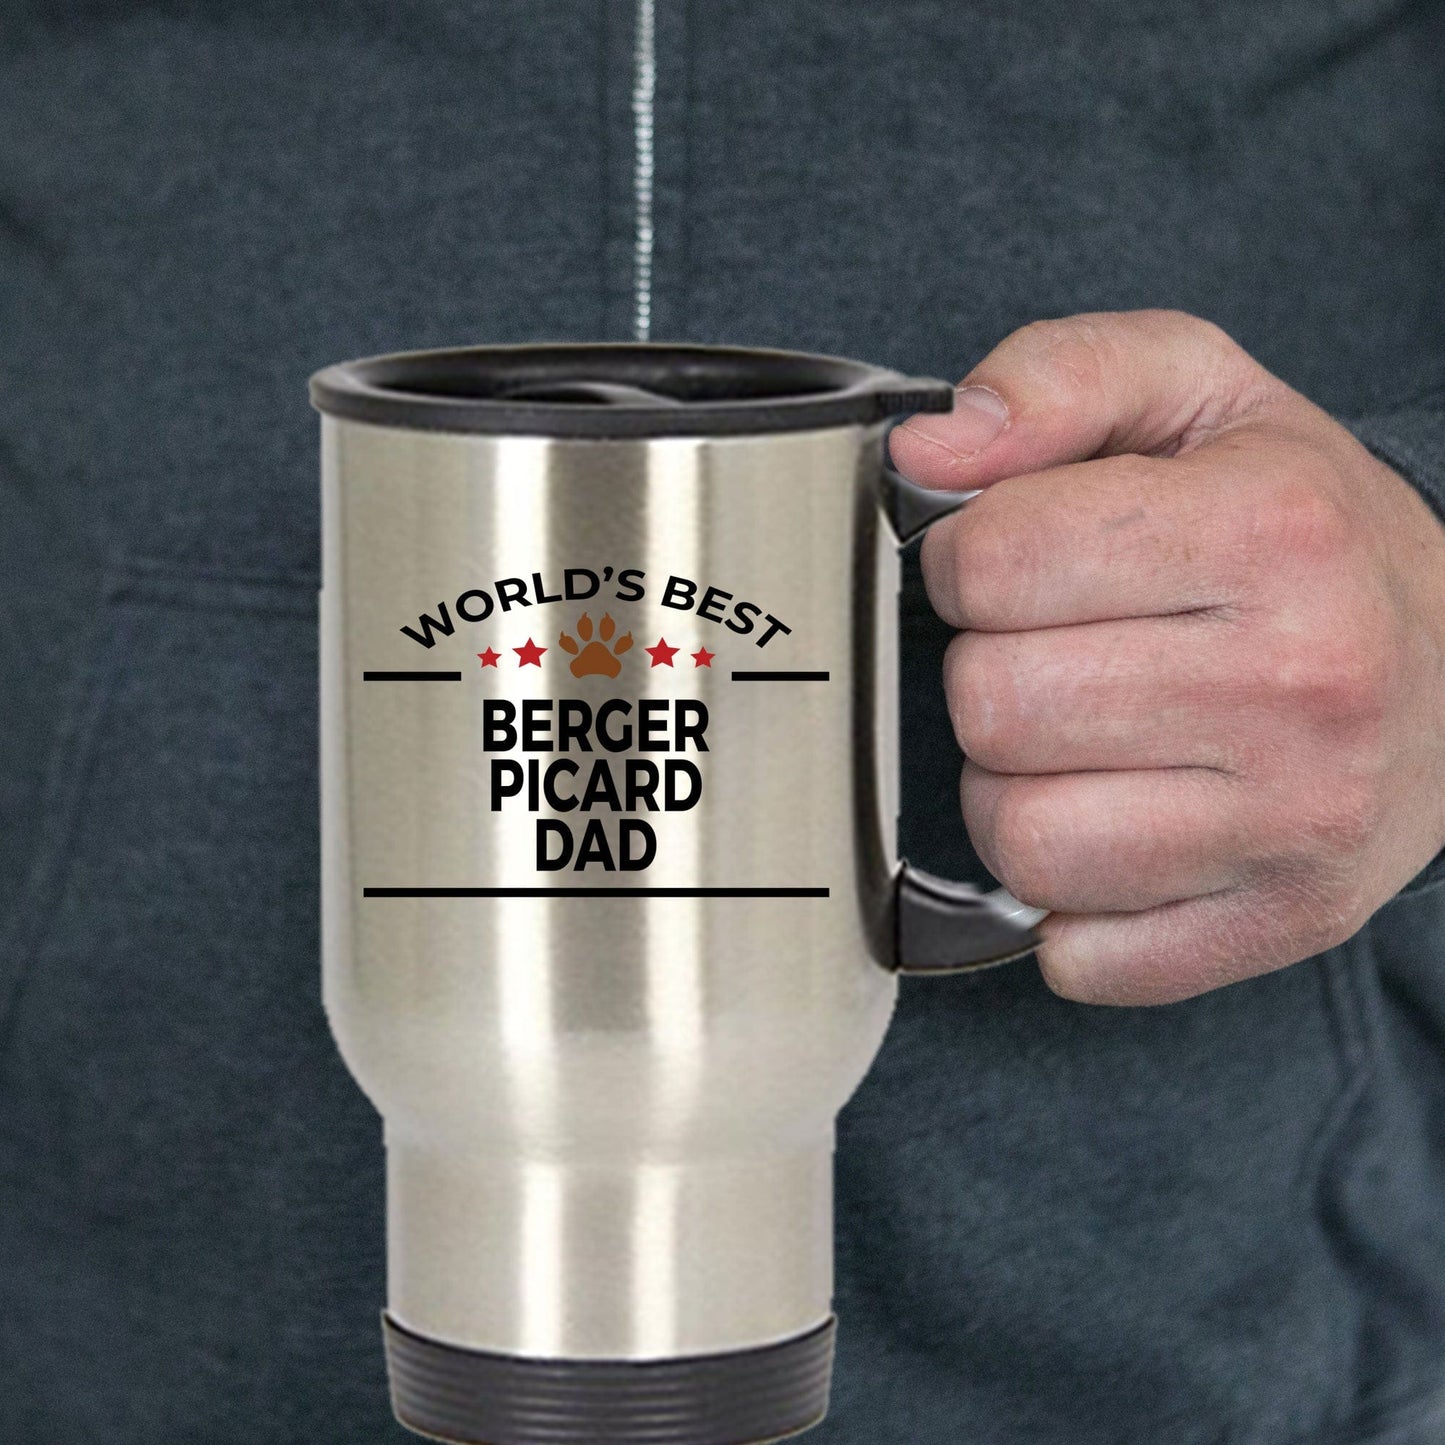 Berger Picard Dog Dad Travel Coffee Mug